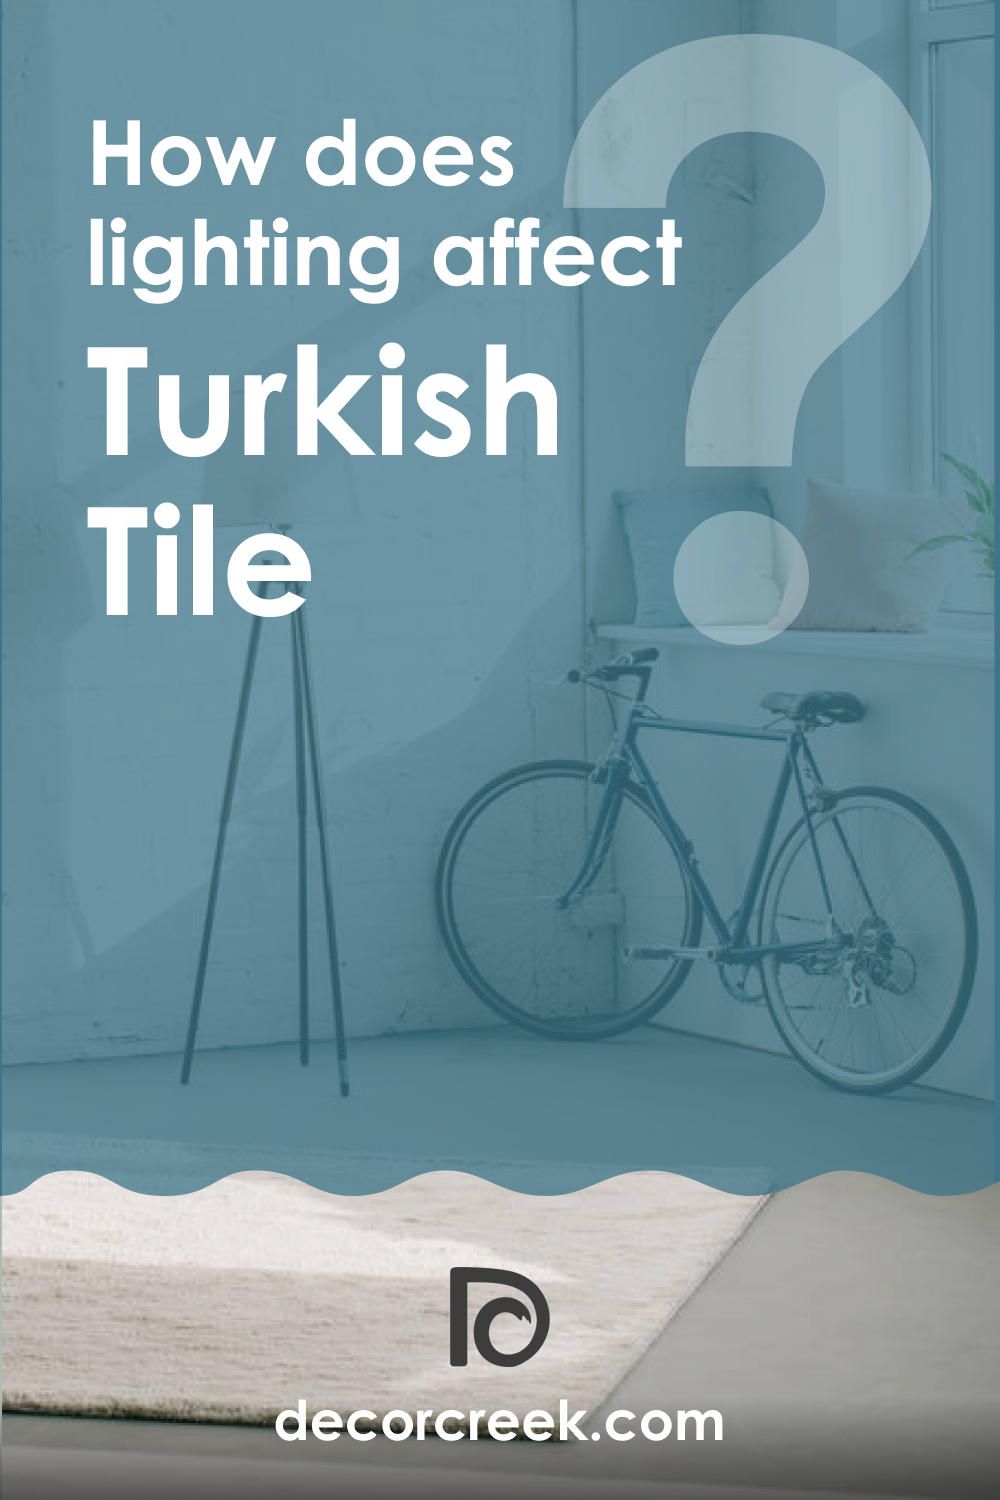 How Does Lighting Affect SW 7610 Turkish Tile?